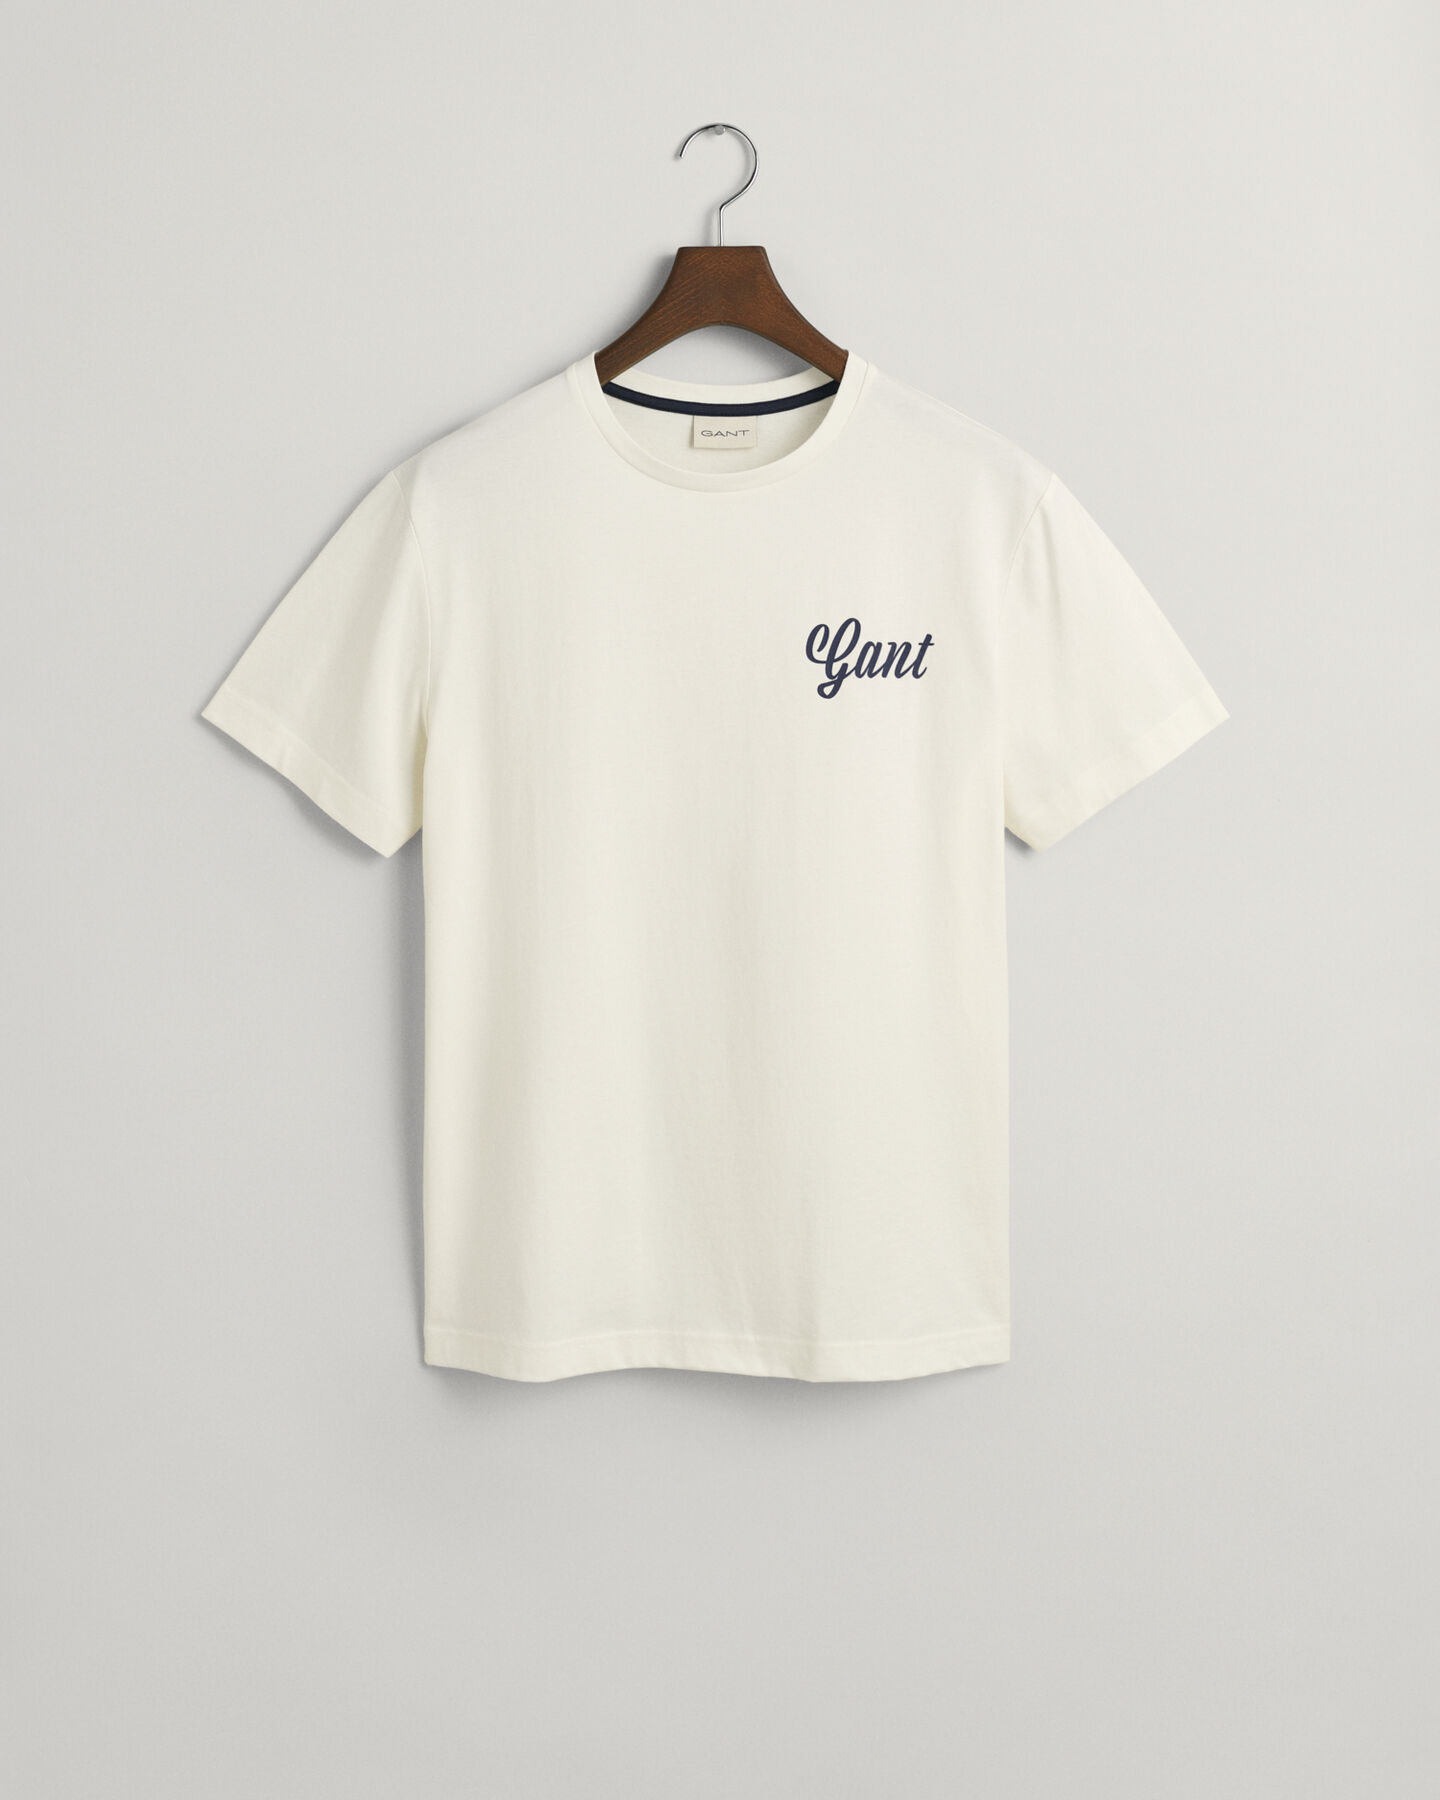 Small GANT Graphic T-Shirt - GANT